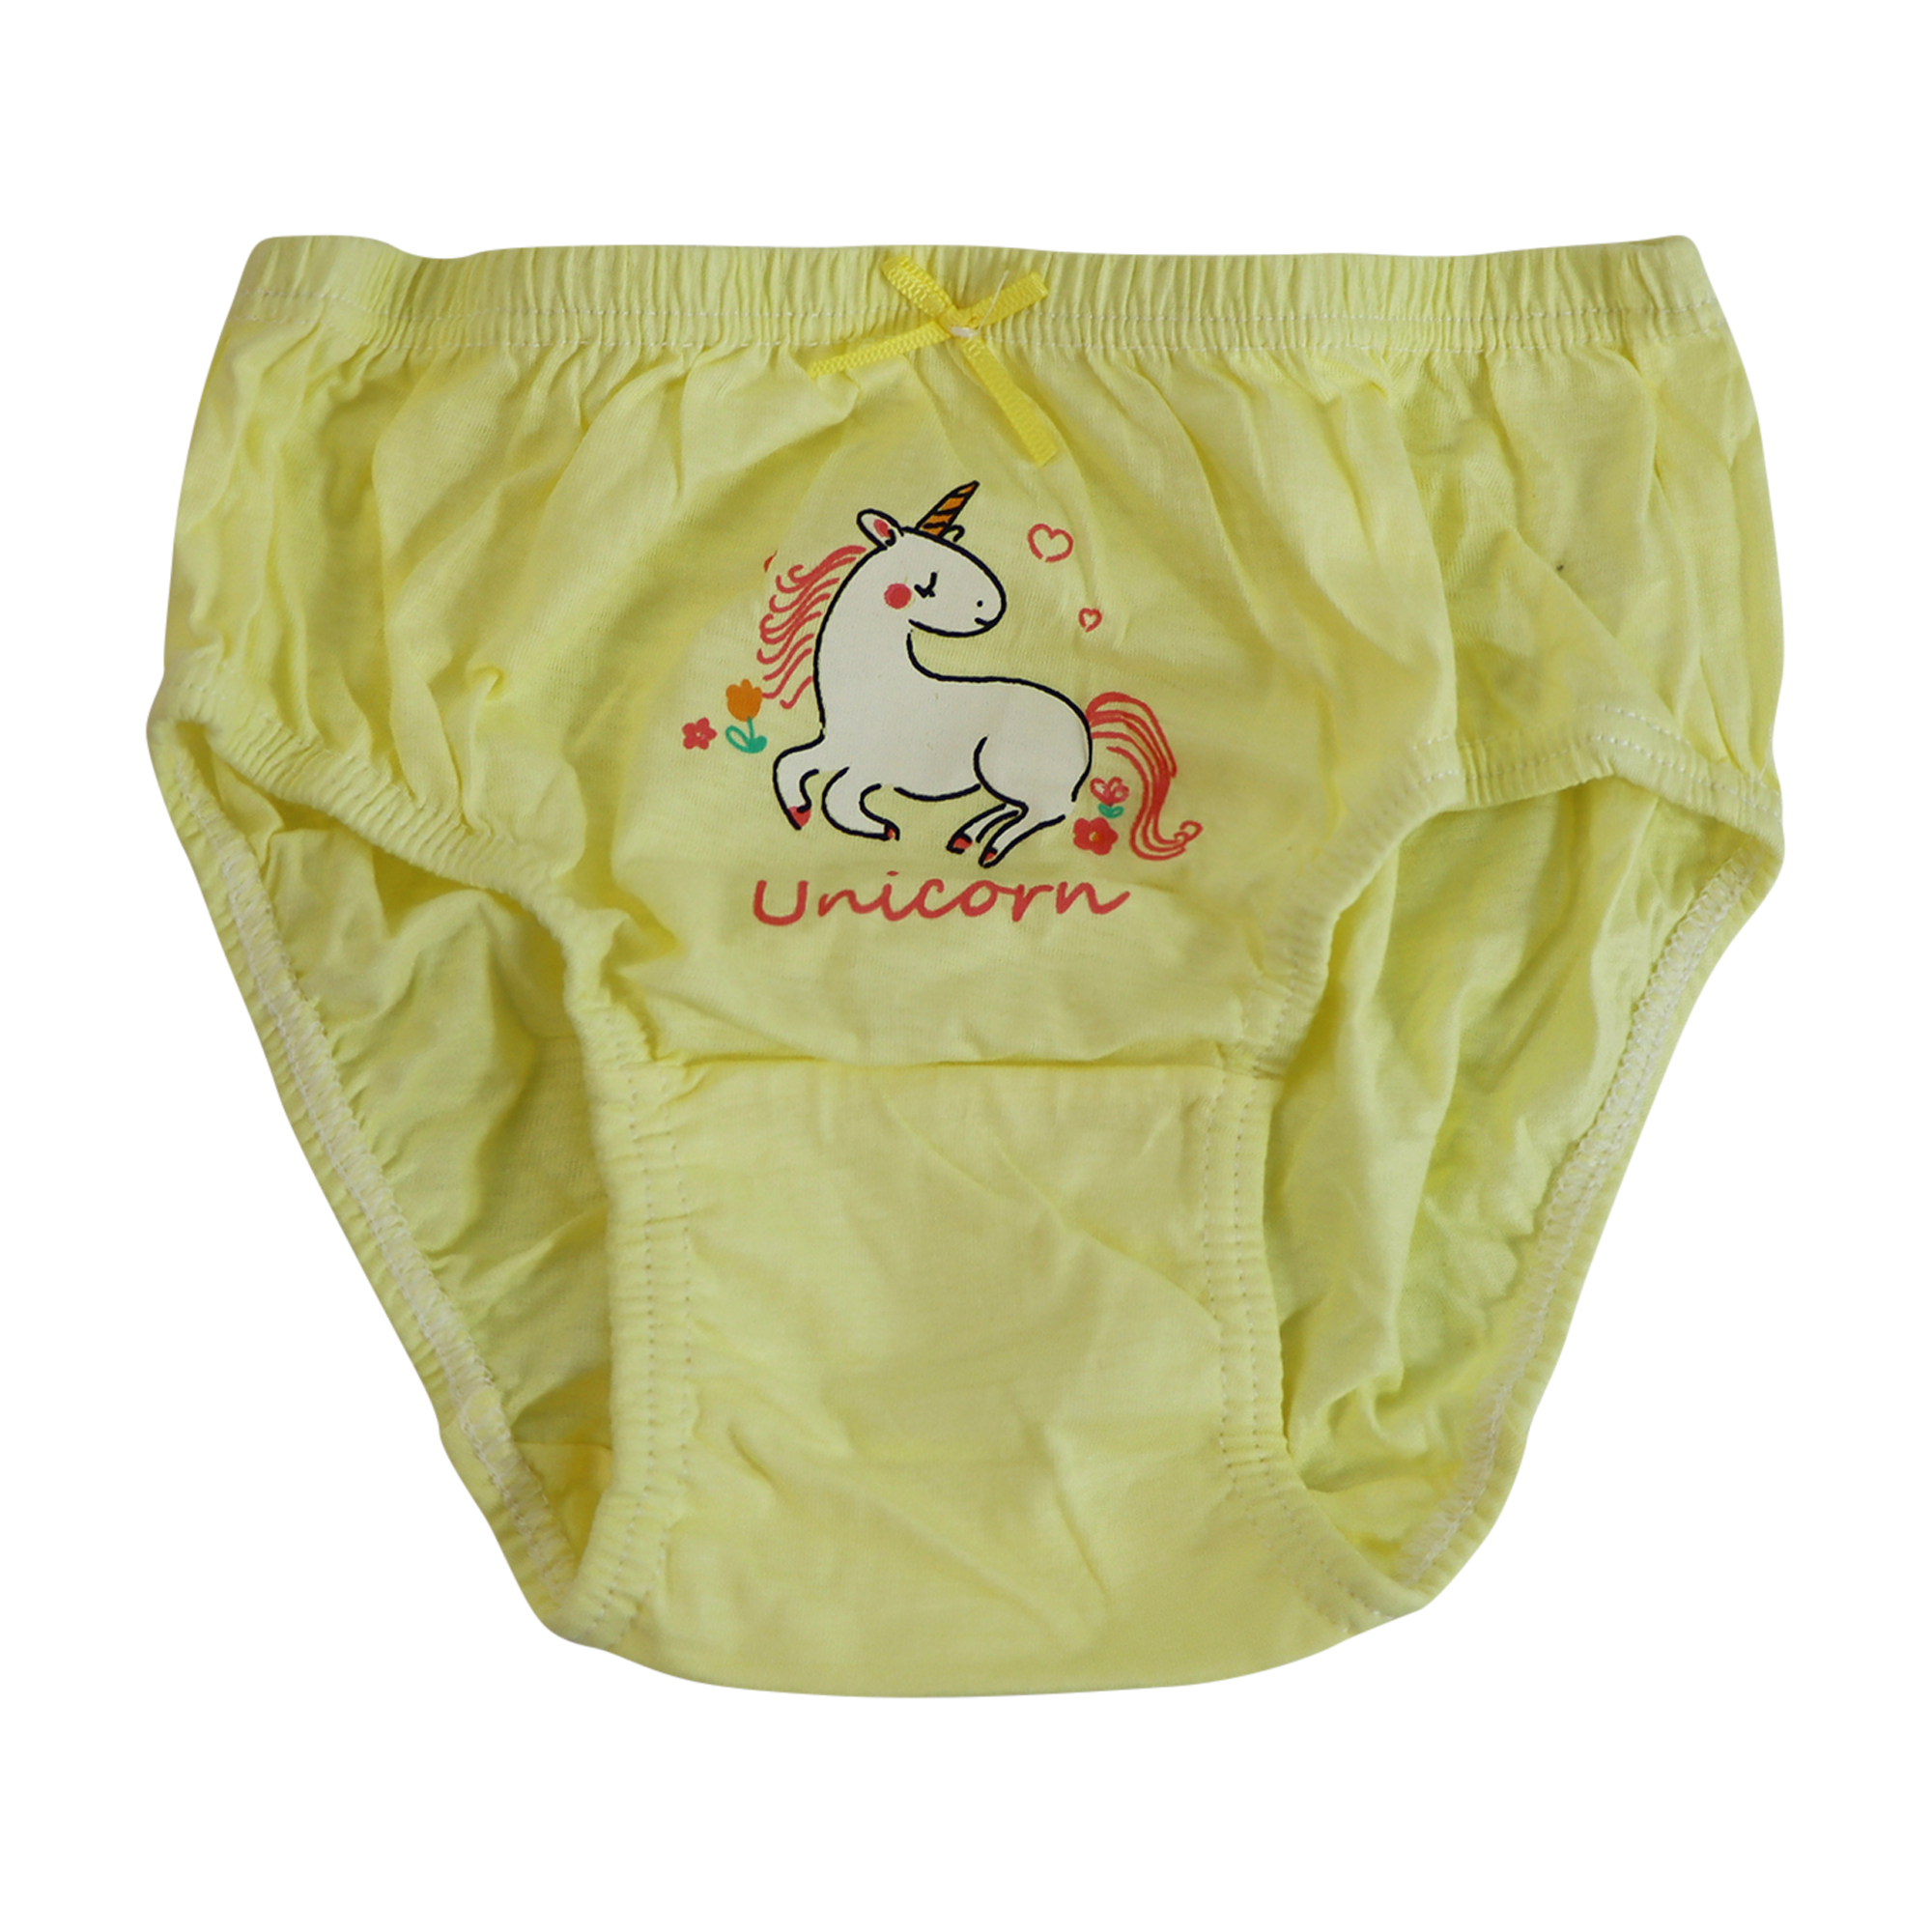 Premium Unicorn Girls Underwear 100% Cotton 5 Pack Size 3-7 Years – Europe  Sense